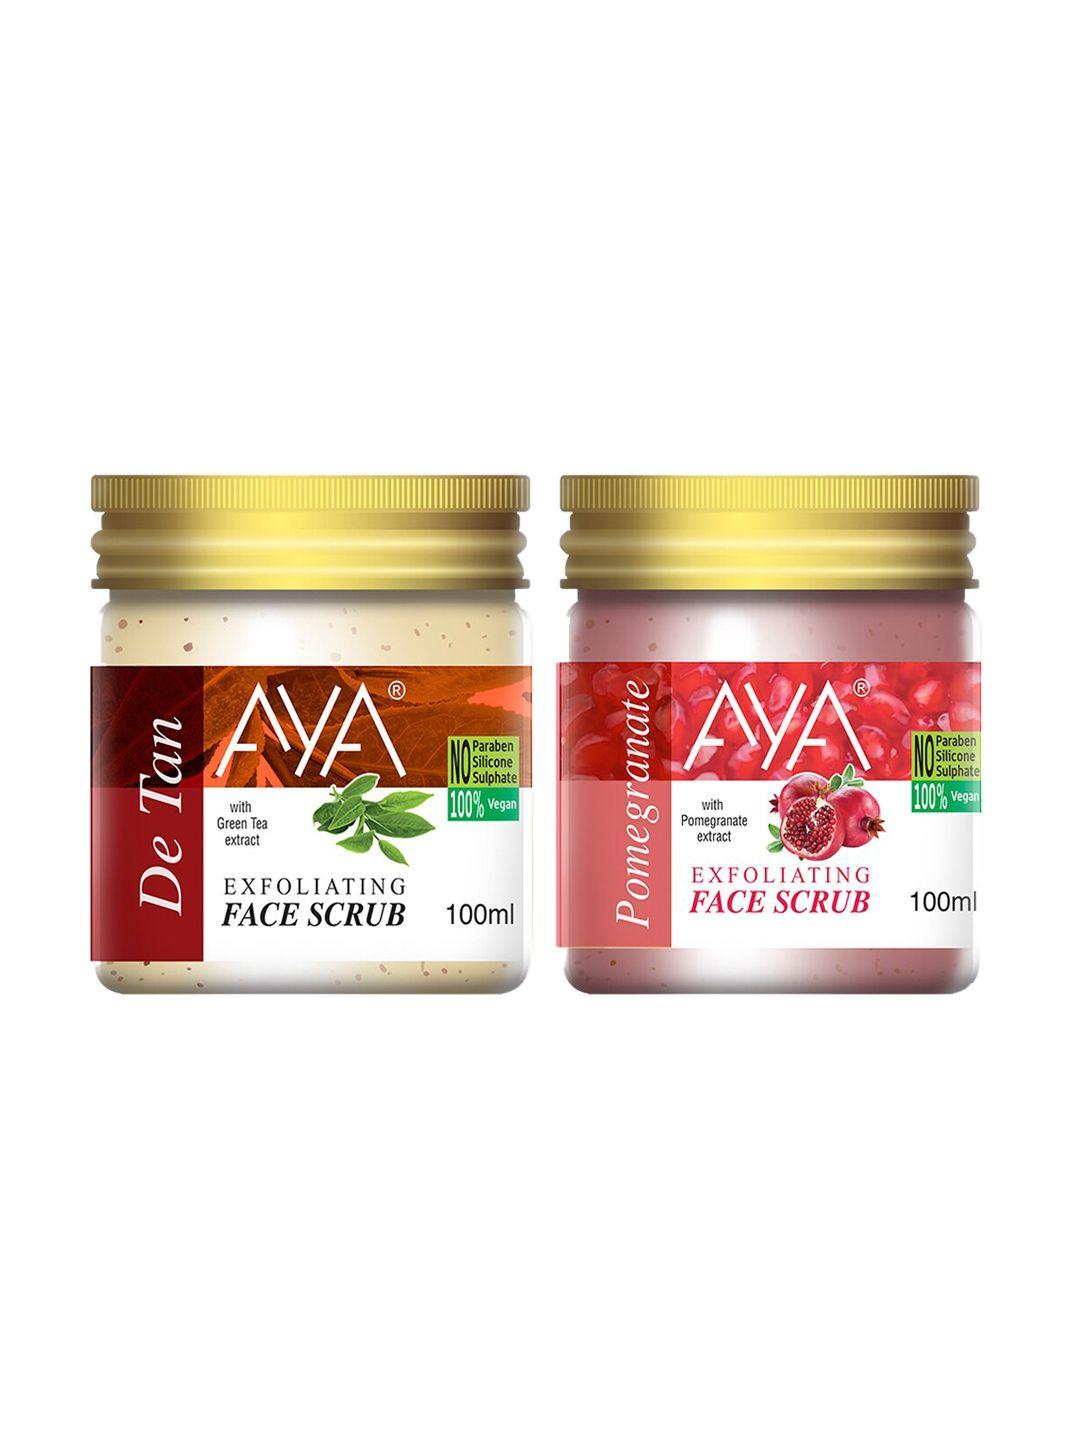 aya set of de tan & pomegranate exfoliating face scrubs - 100 ml each